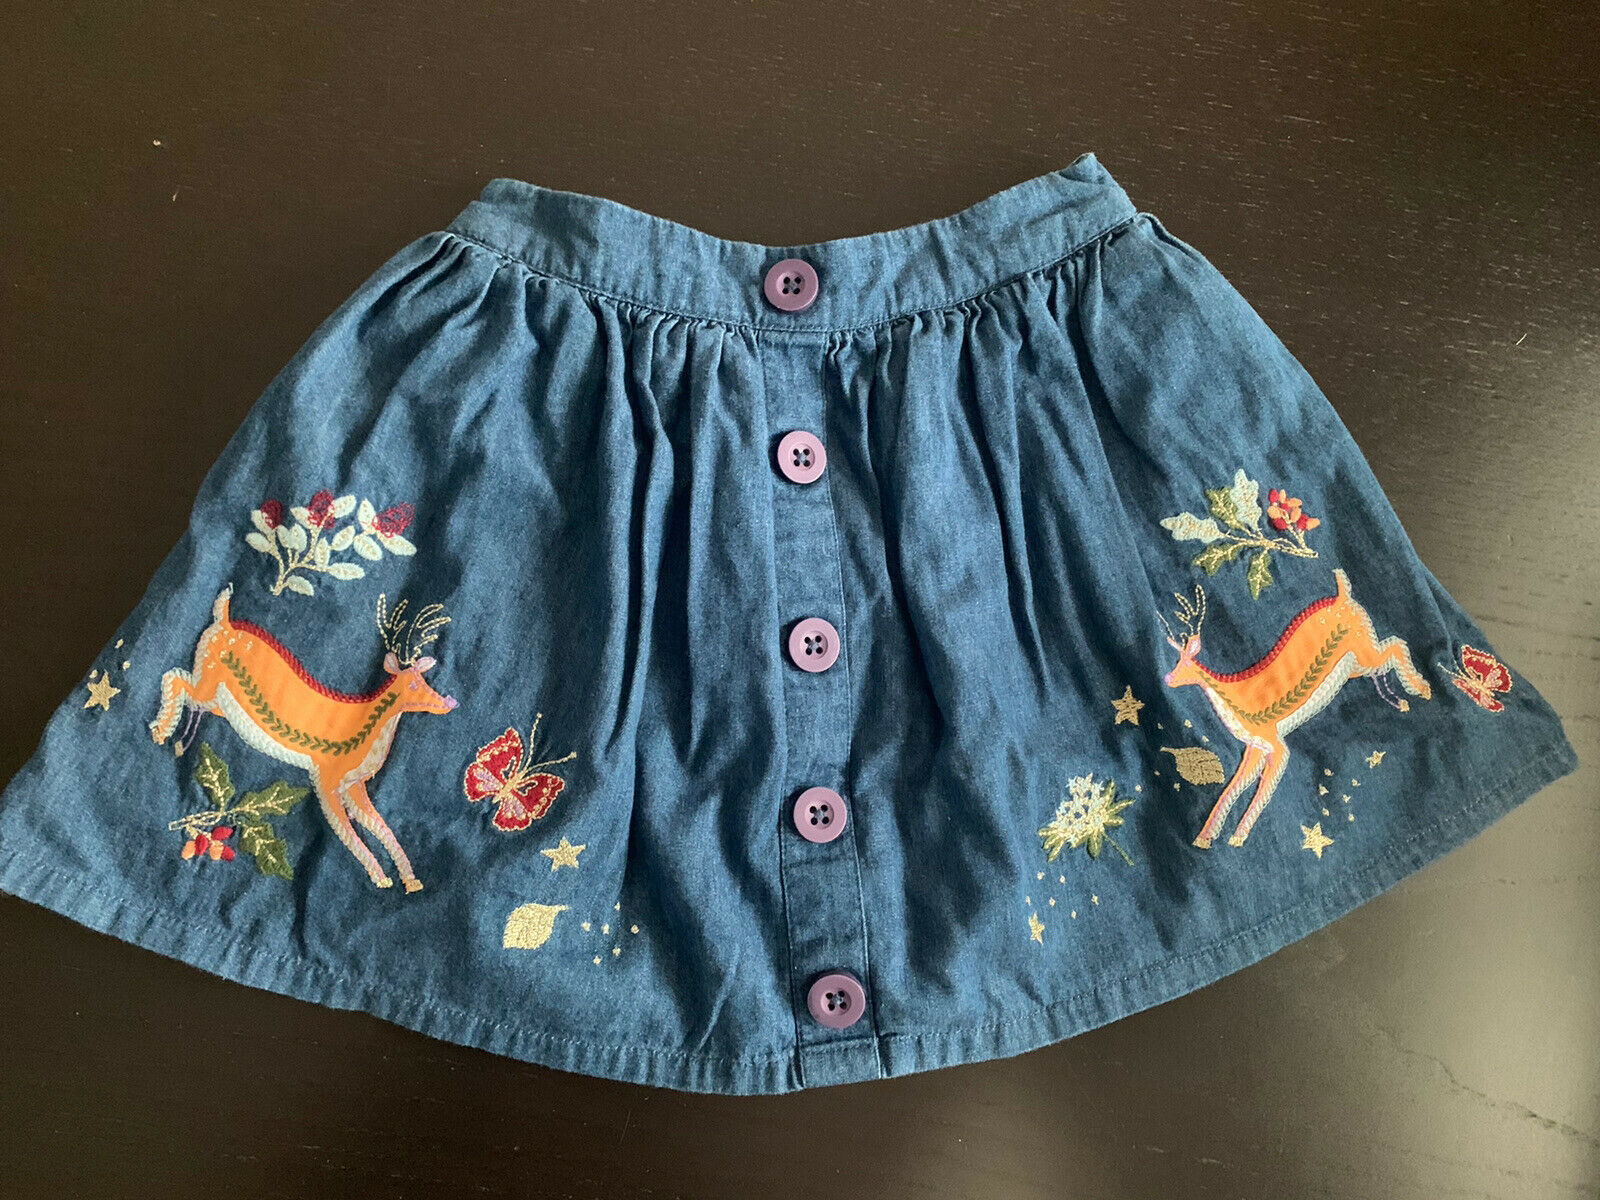 Mini Boden Skirt Size 3-4 Years